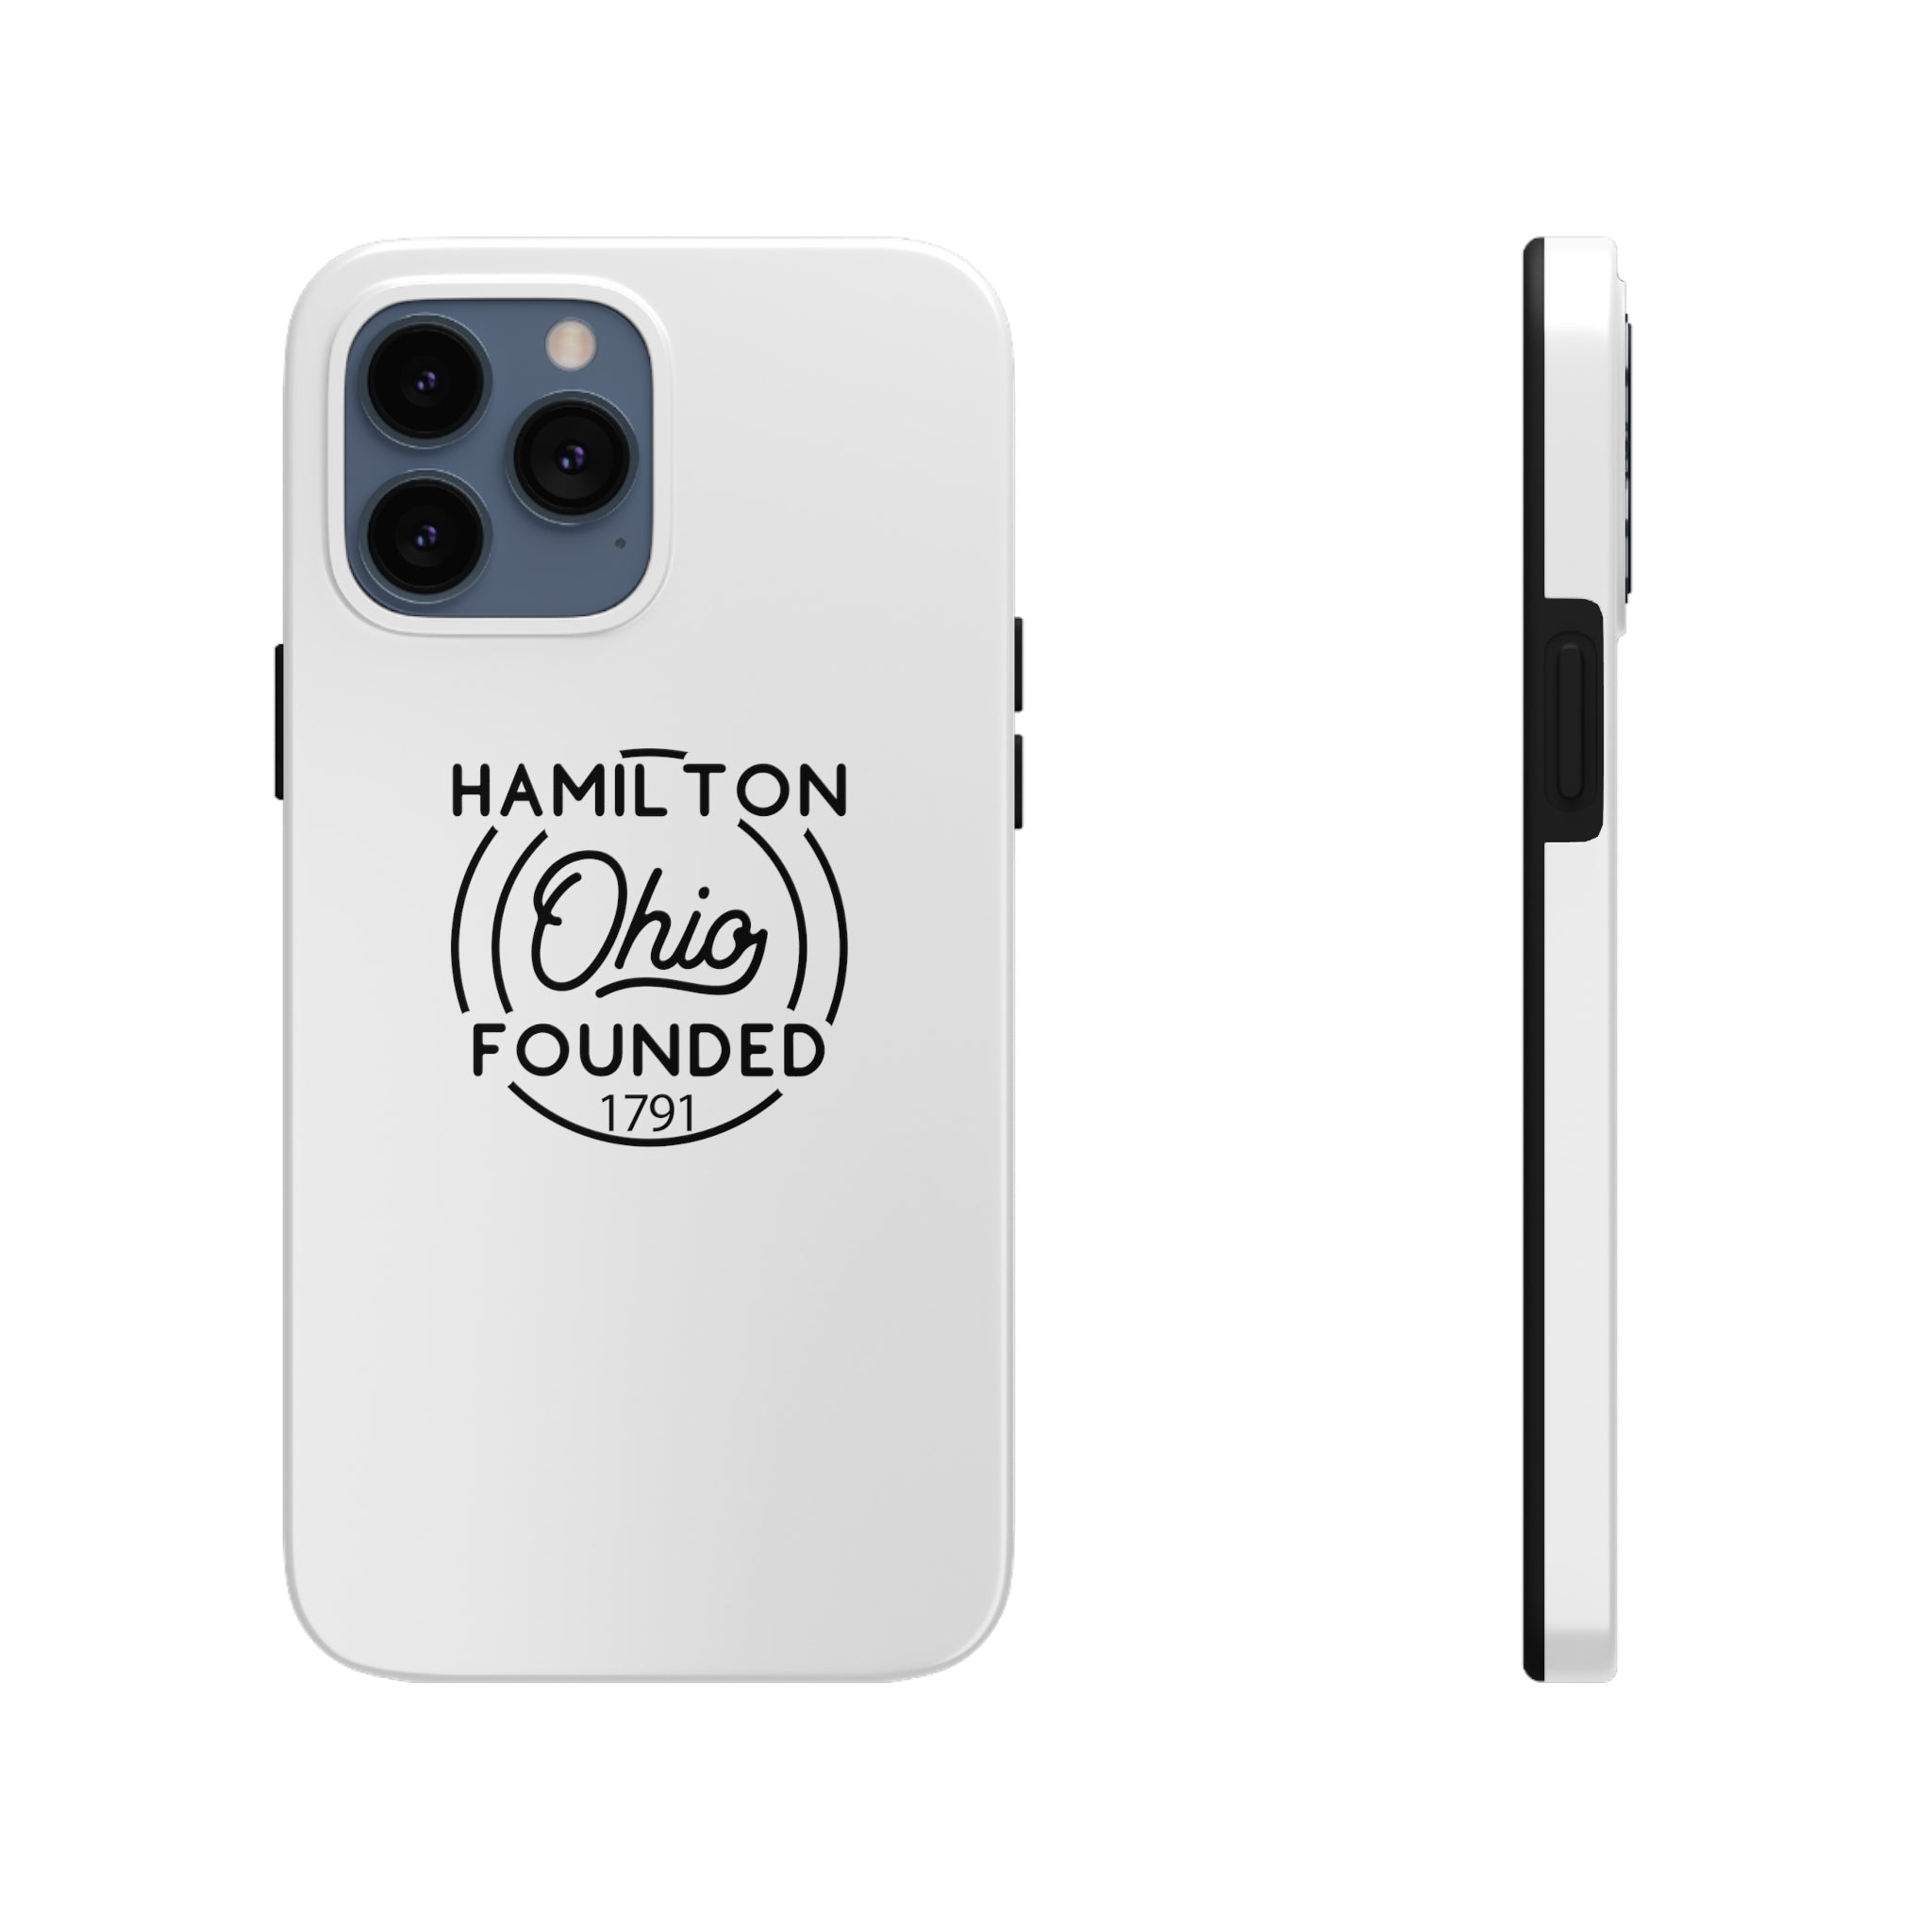 White iphone 13 pro max case for Hamilton, Ohio